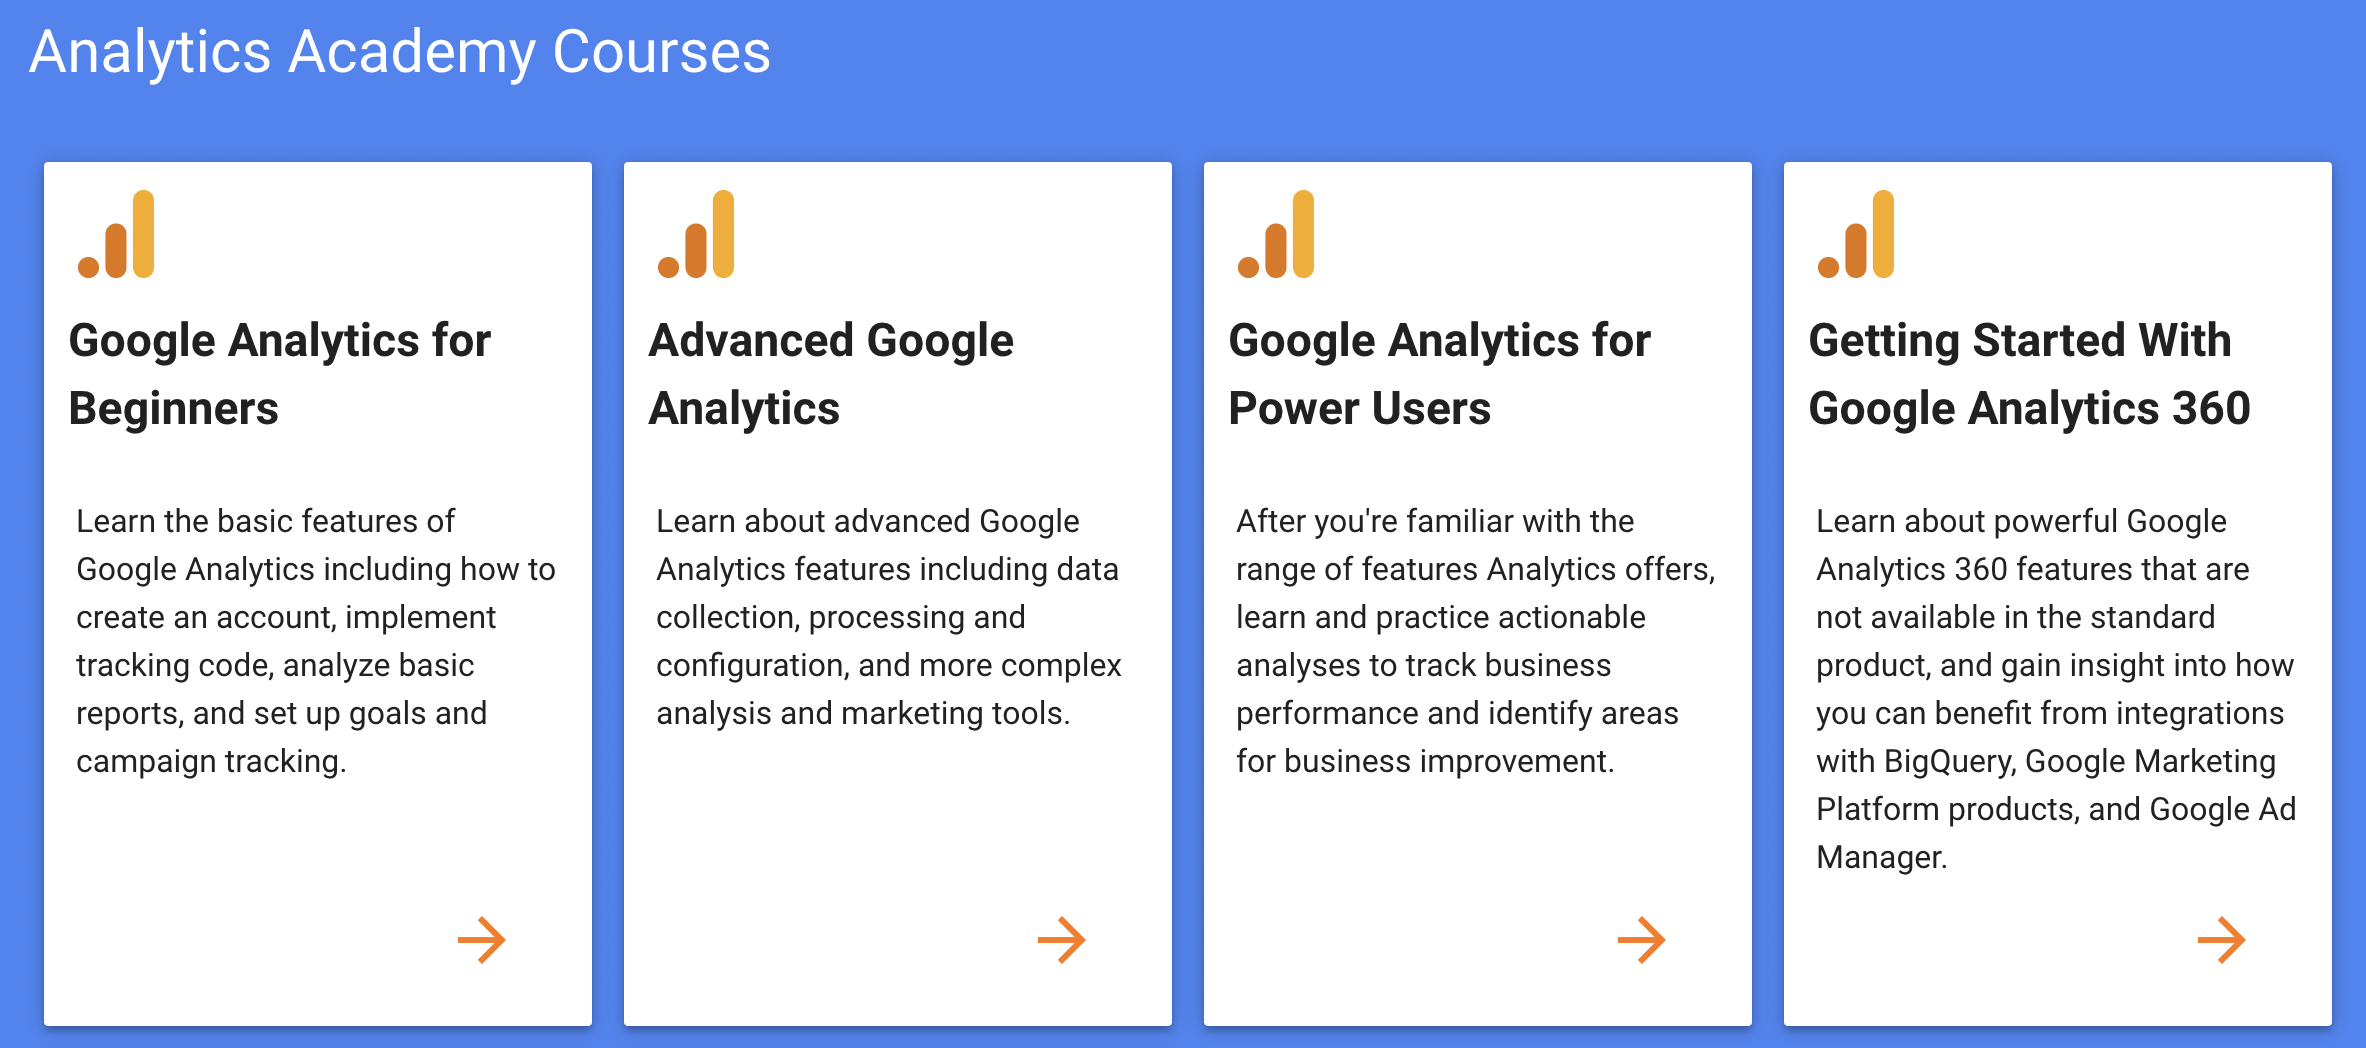 Google Analytics Academy available courses.